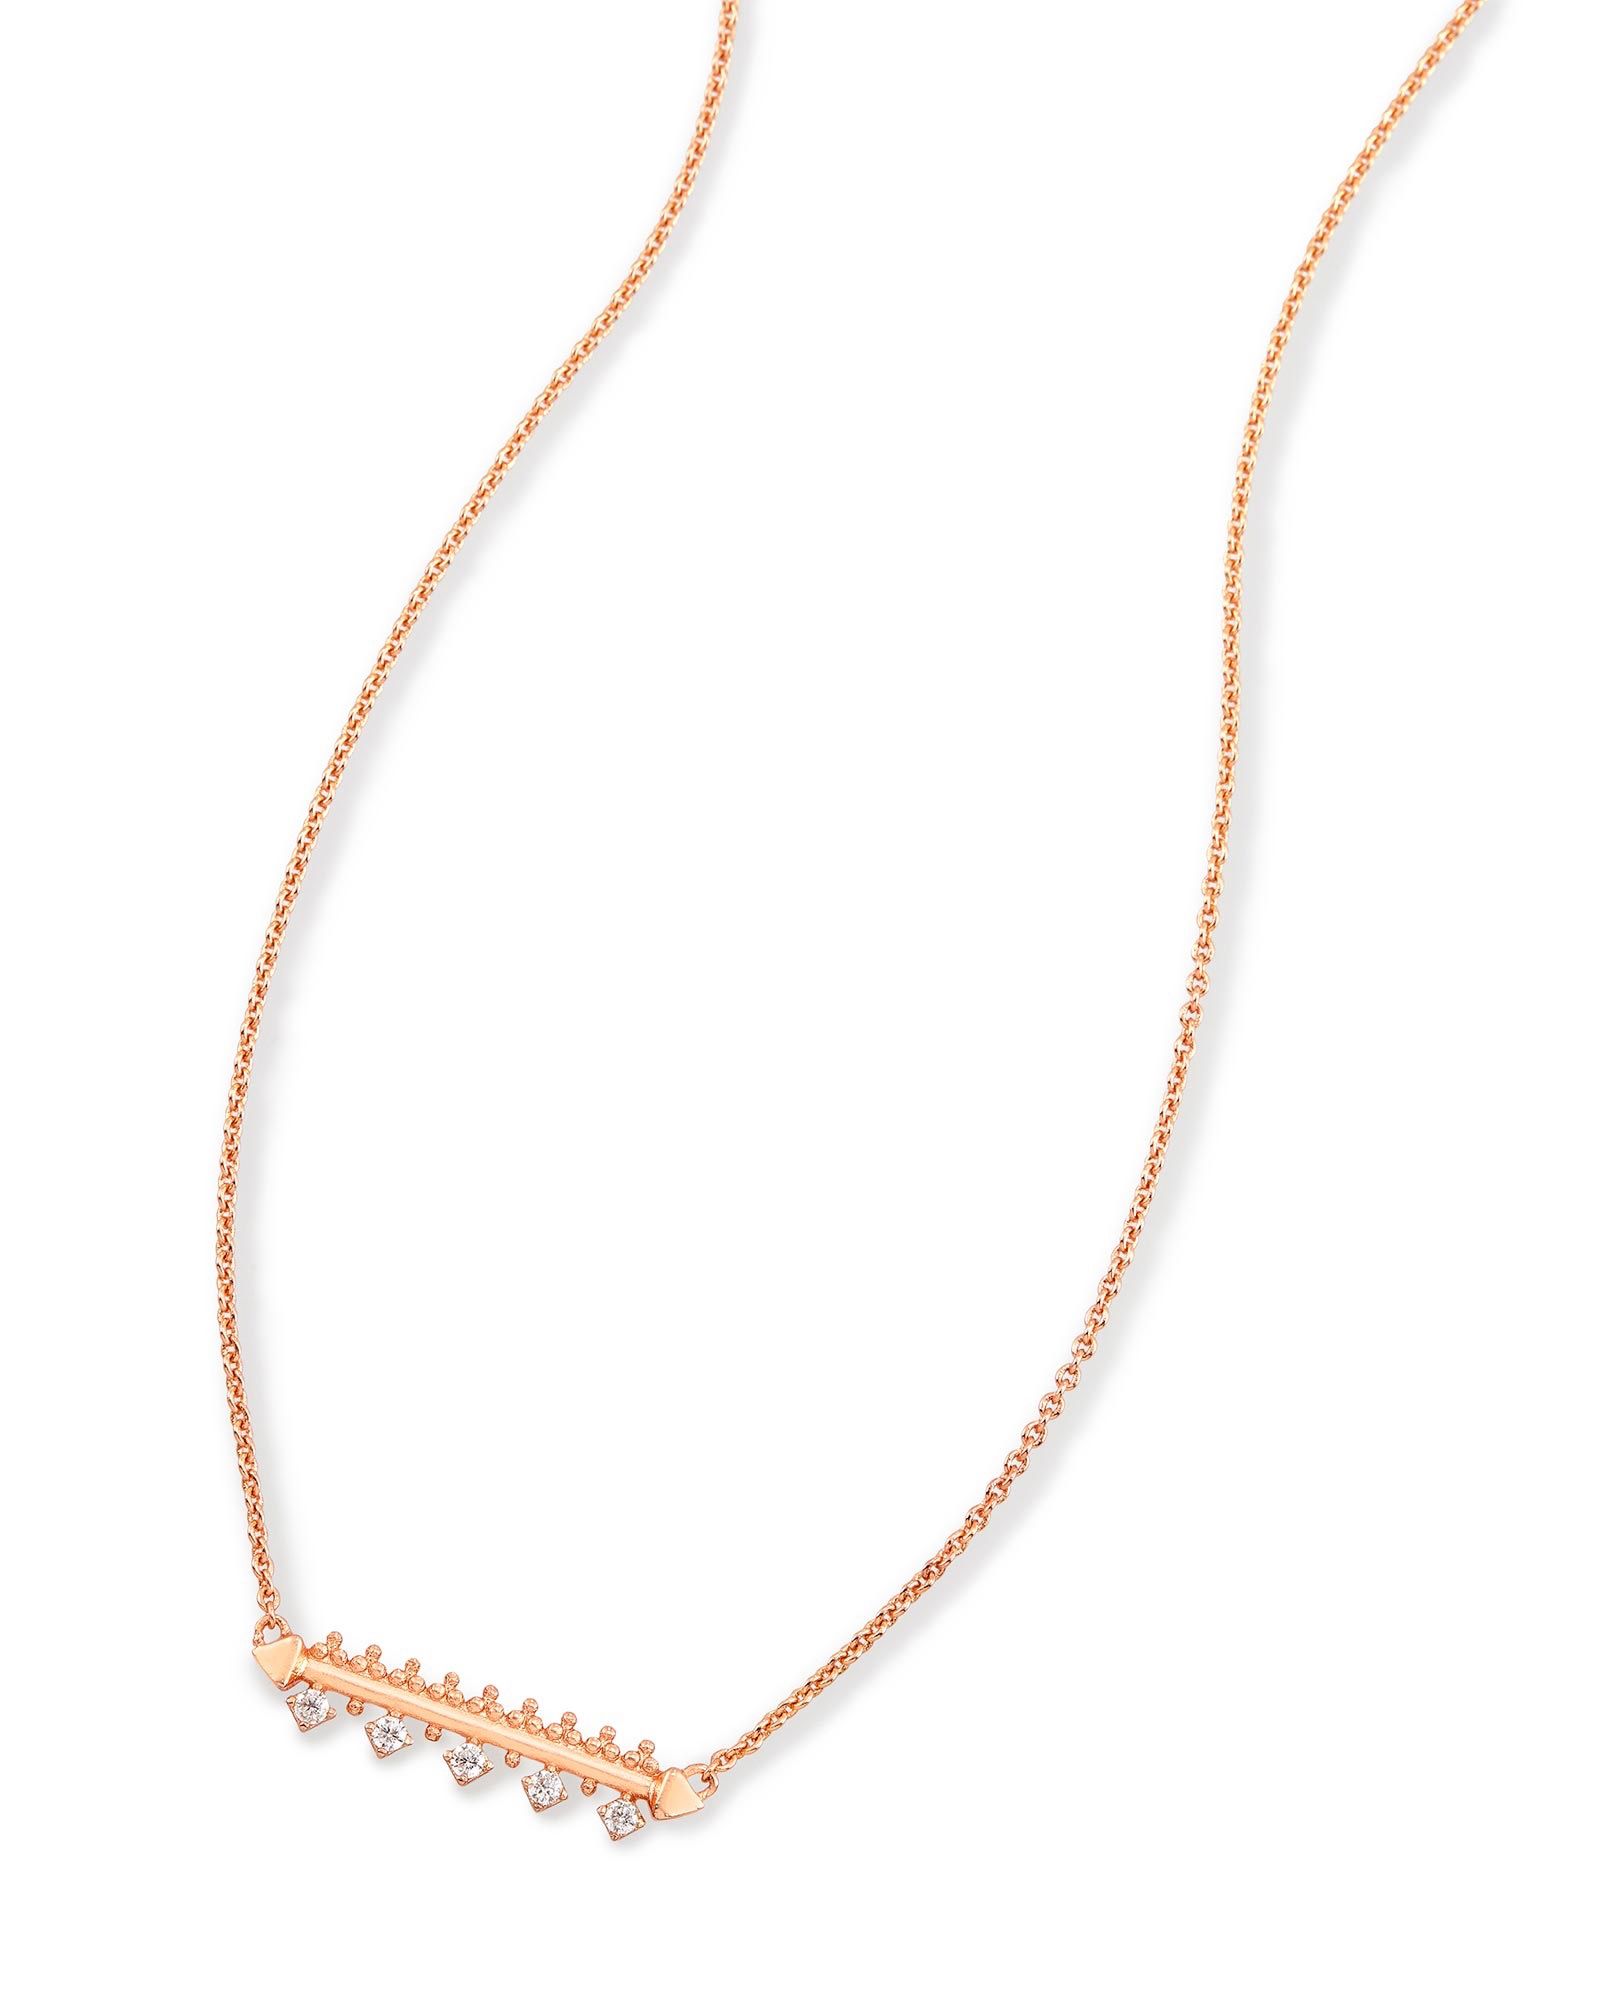 Anissa Bar Pendant Necklace in Rose Gold | Kendra Scott